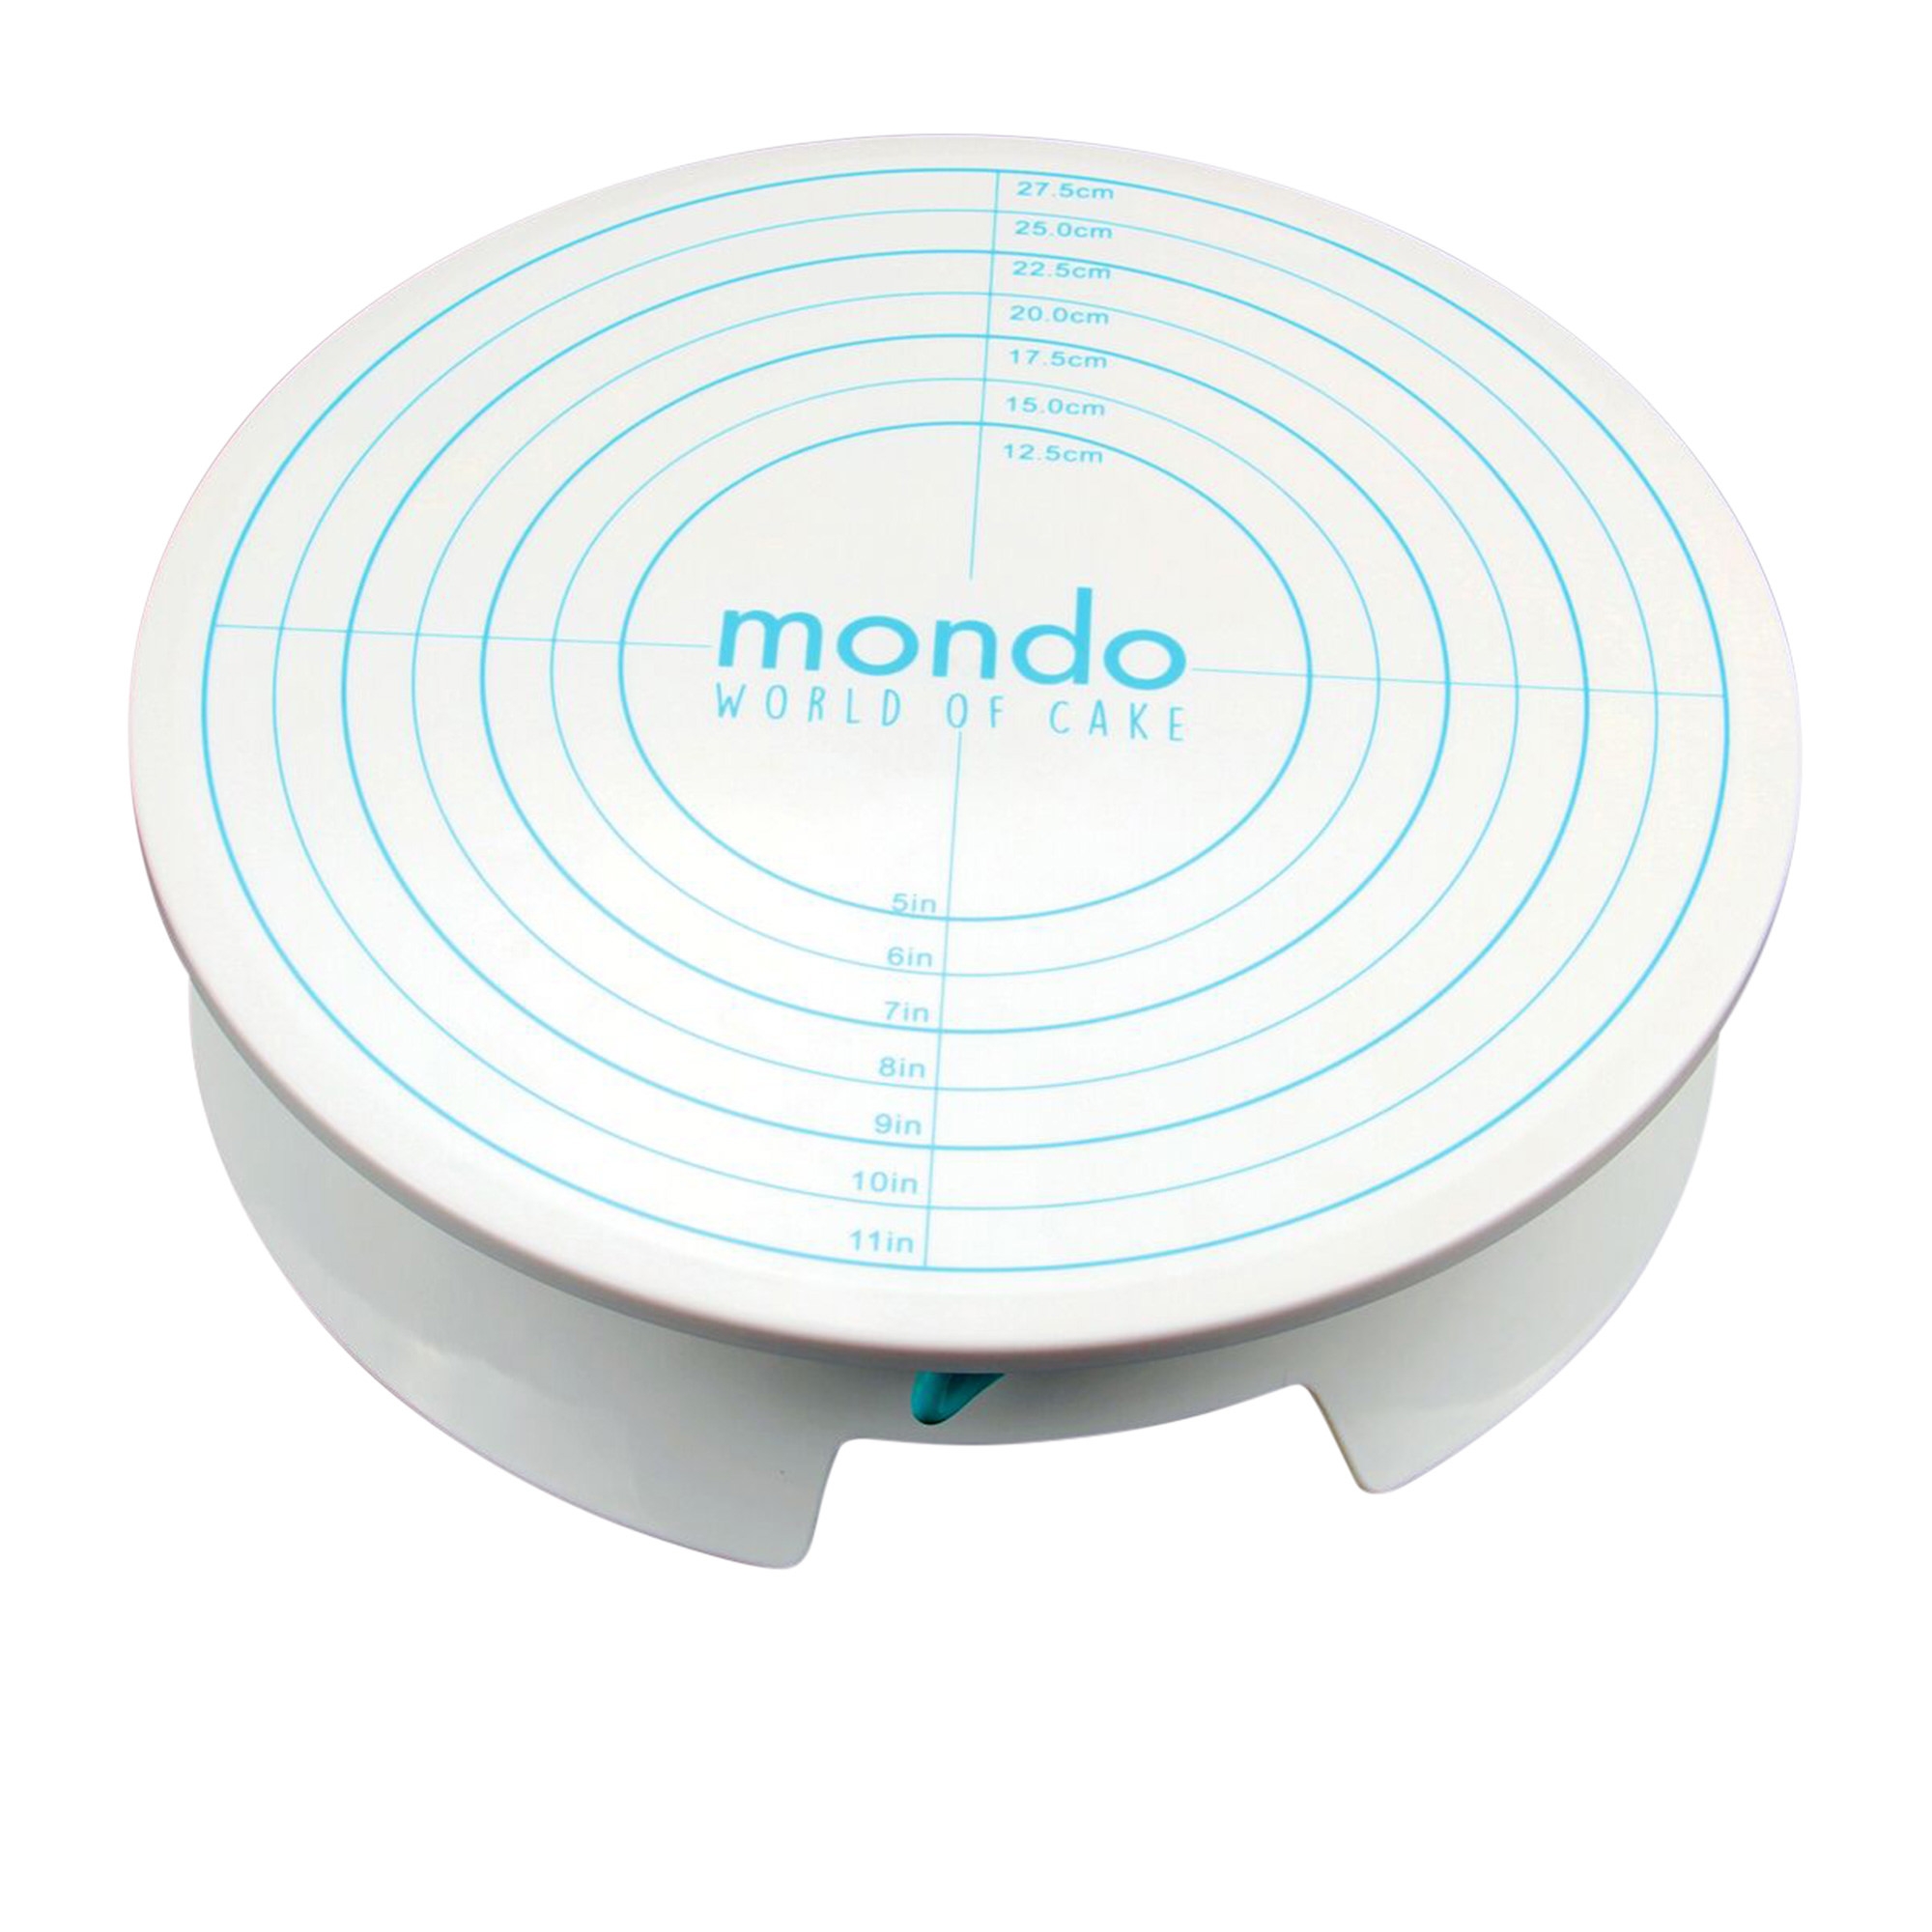 Mondo Cake Decorating Turntable with Brake 30cm Image 1